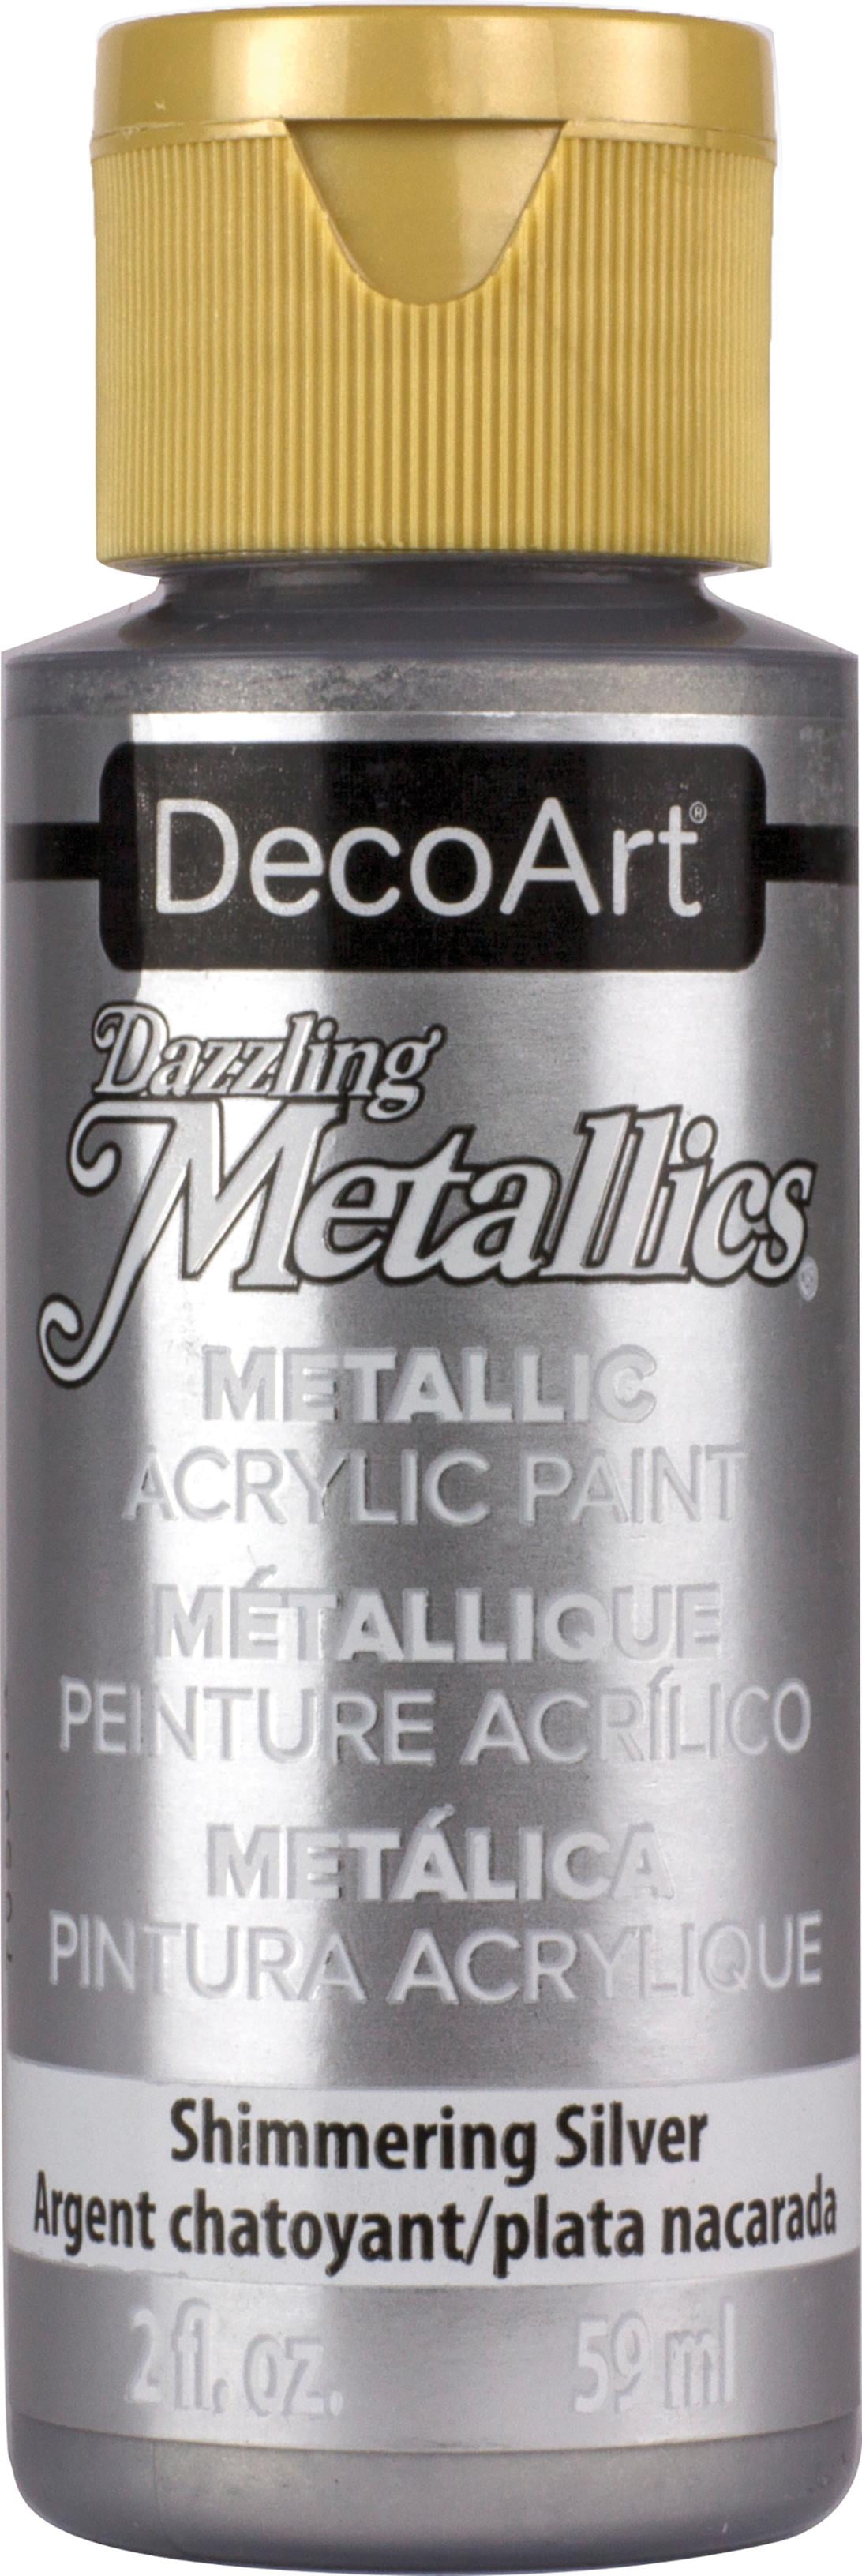  DecoArt Dazzling Metallics 2-Ounce Emperor's Gold Acrylic Paint